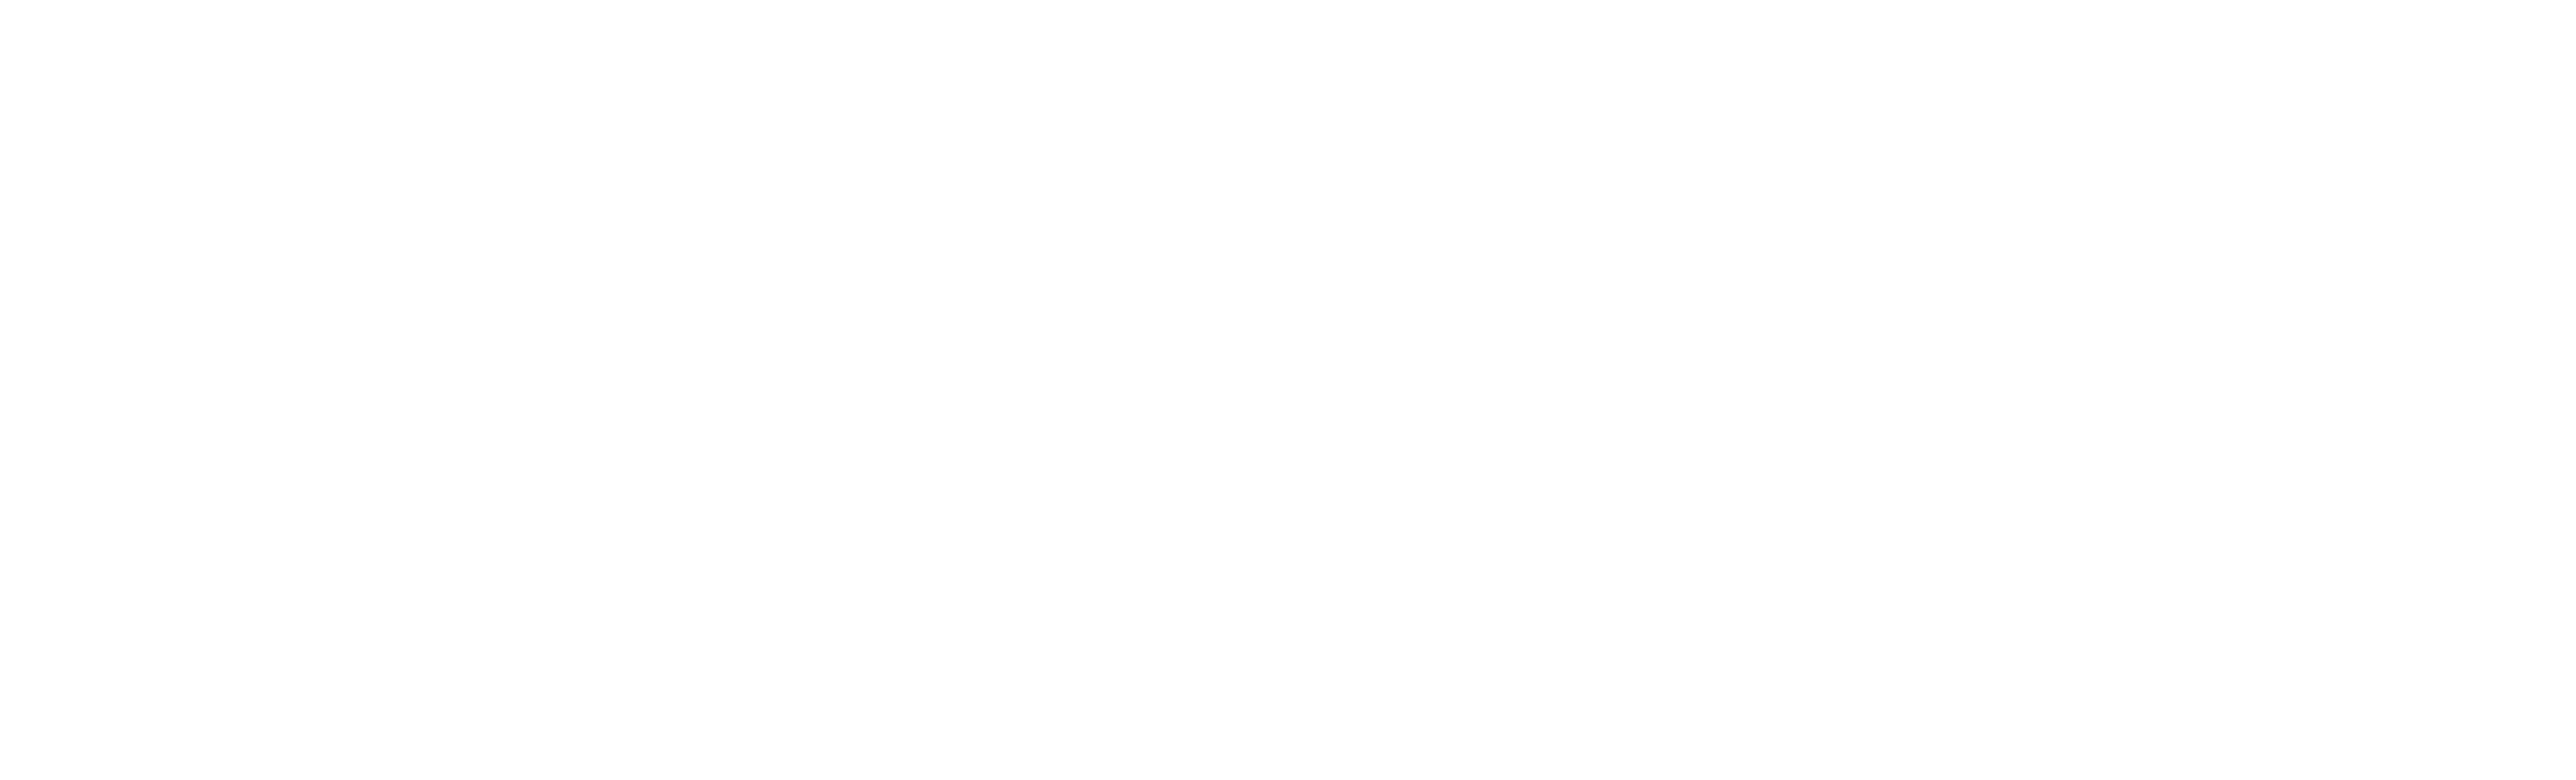 Chris Melvin Creative logo in white.